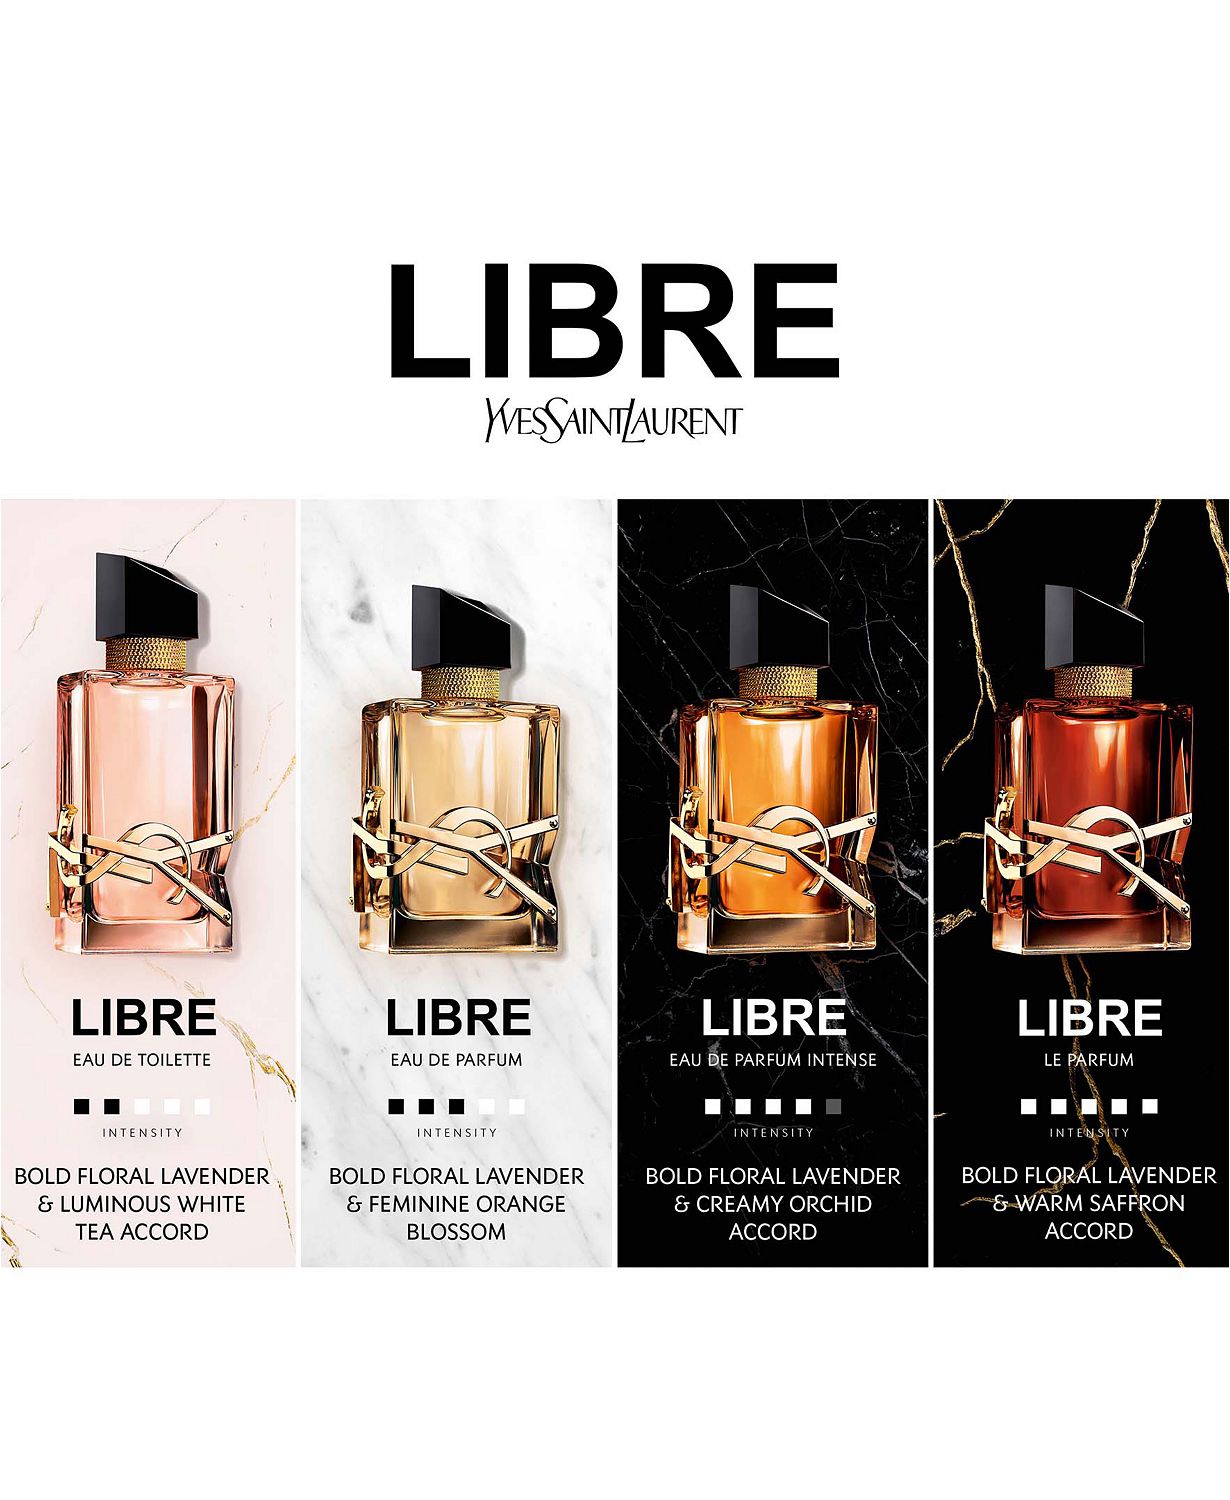 Libre Le Parfum Spray, 1.6 oz.